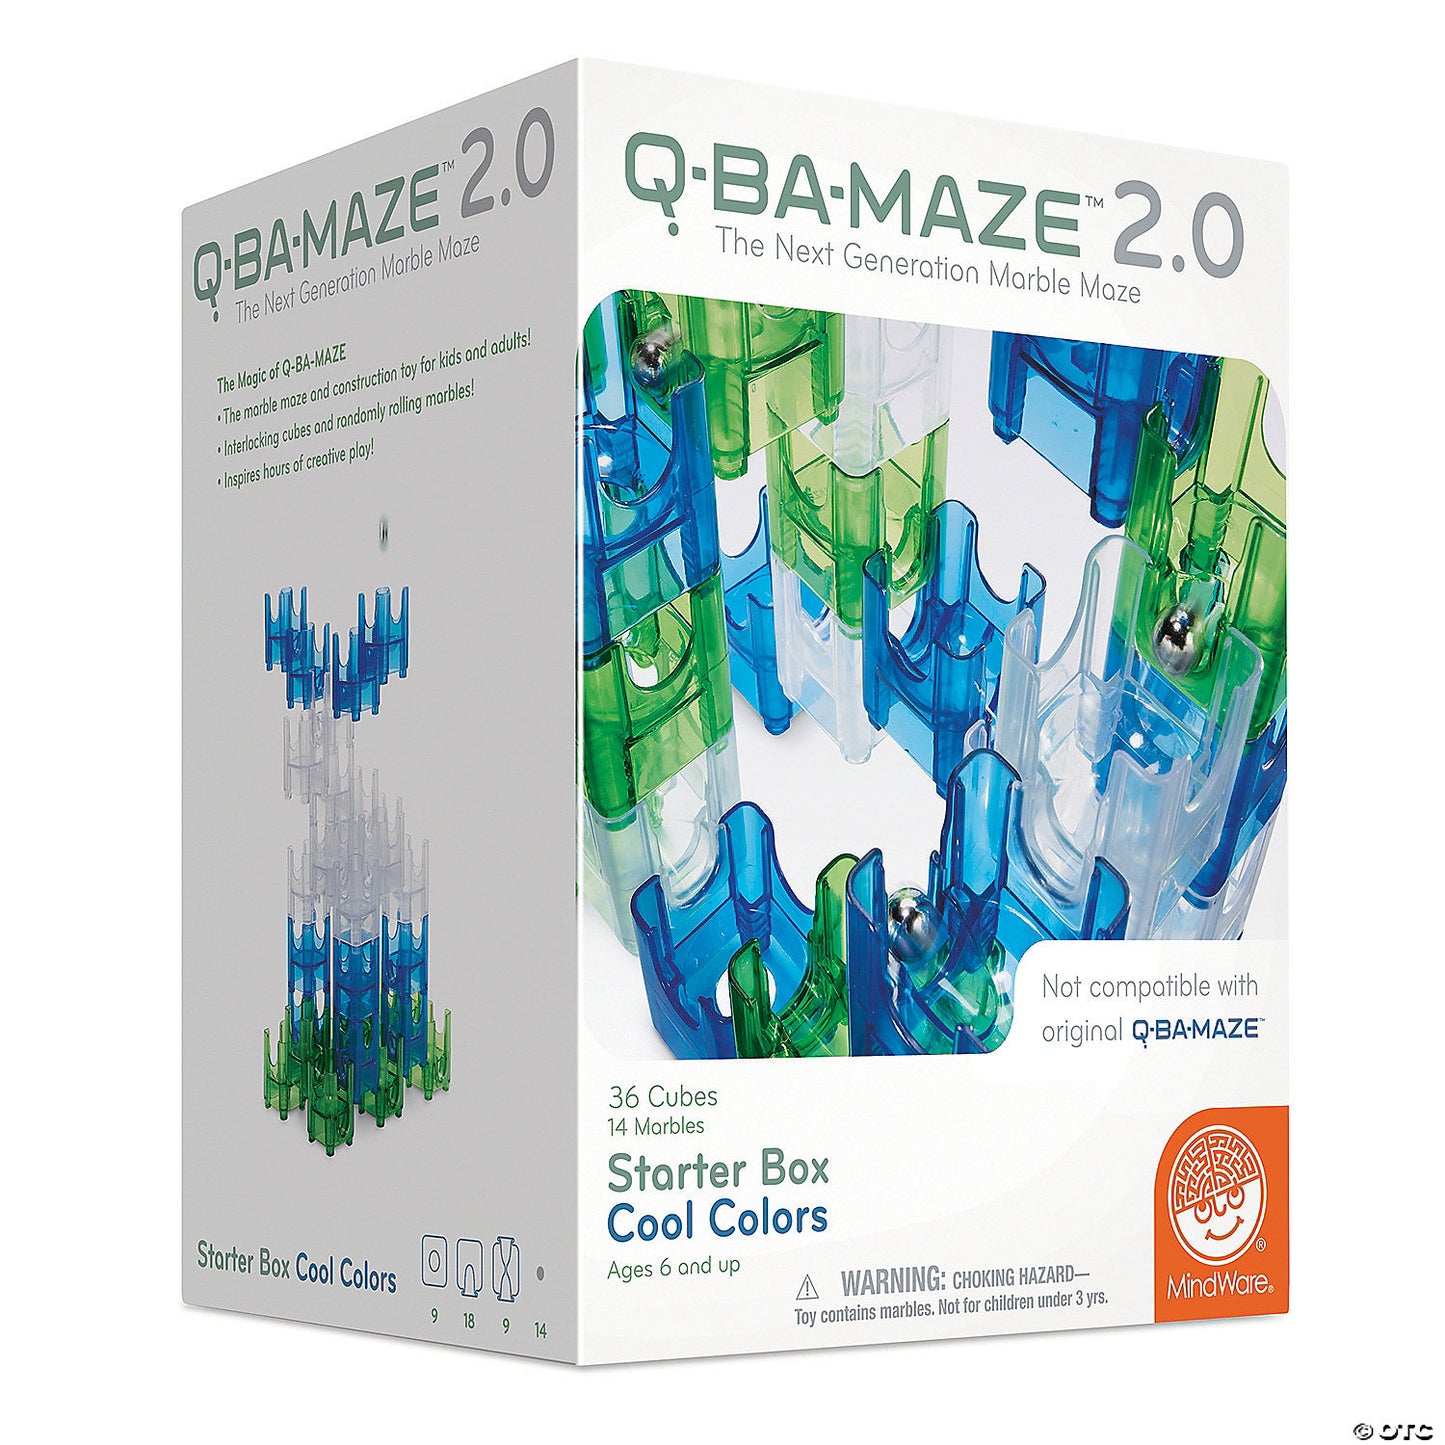 Q-BA-Maze 2.0 Starter Box Cool Colors